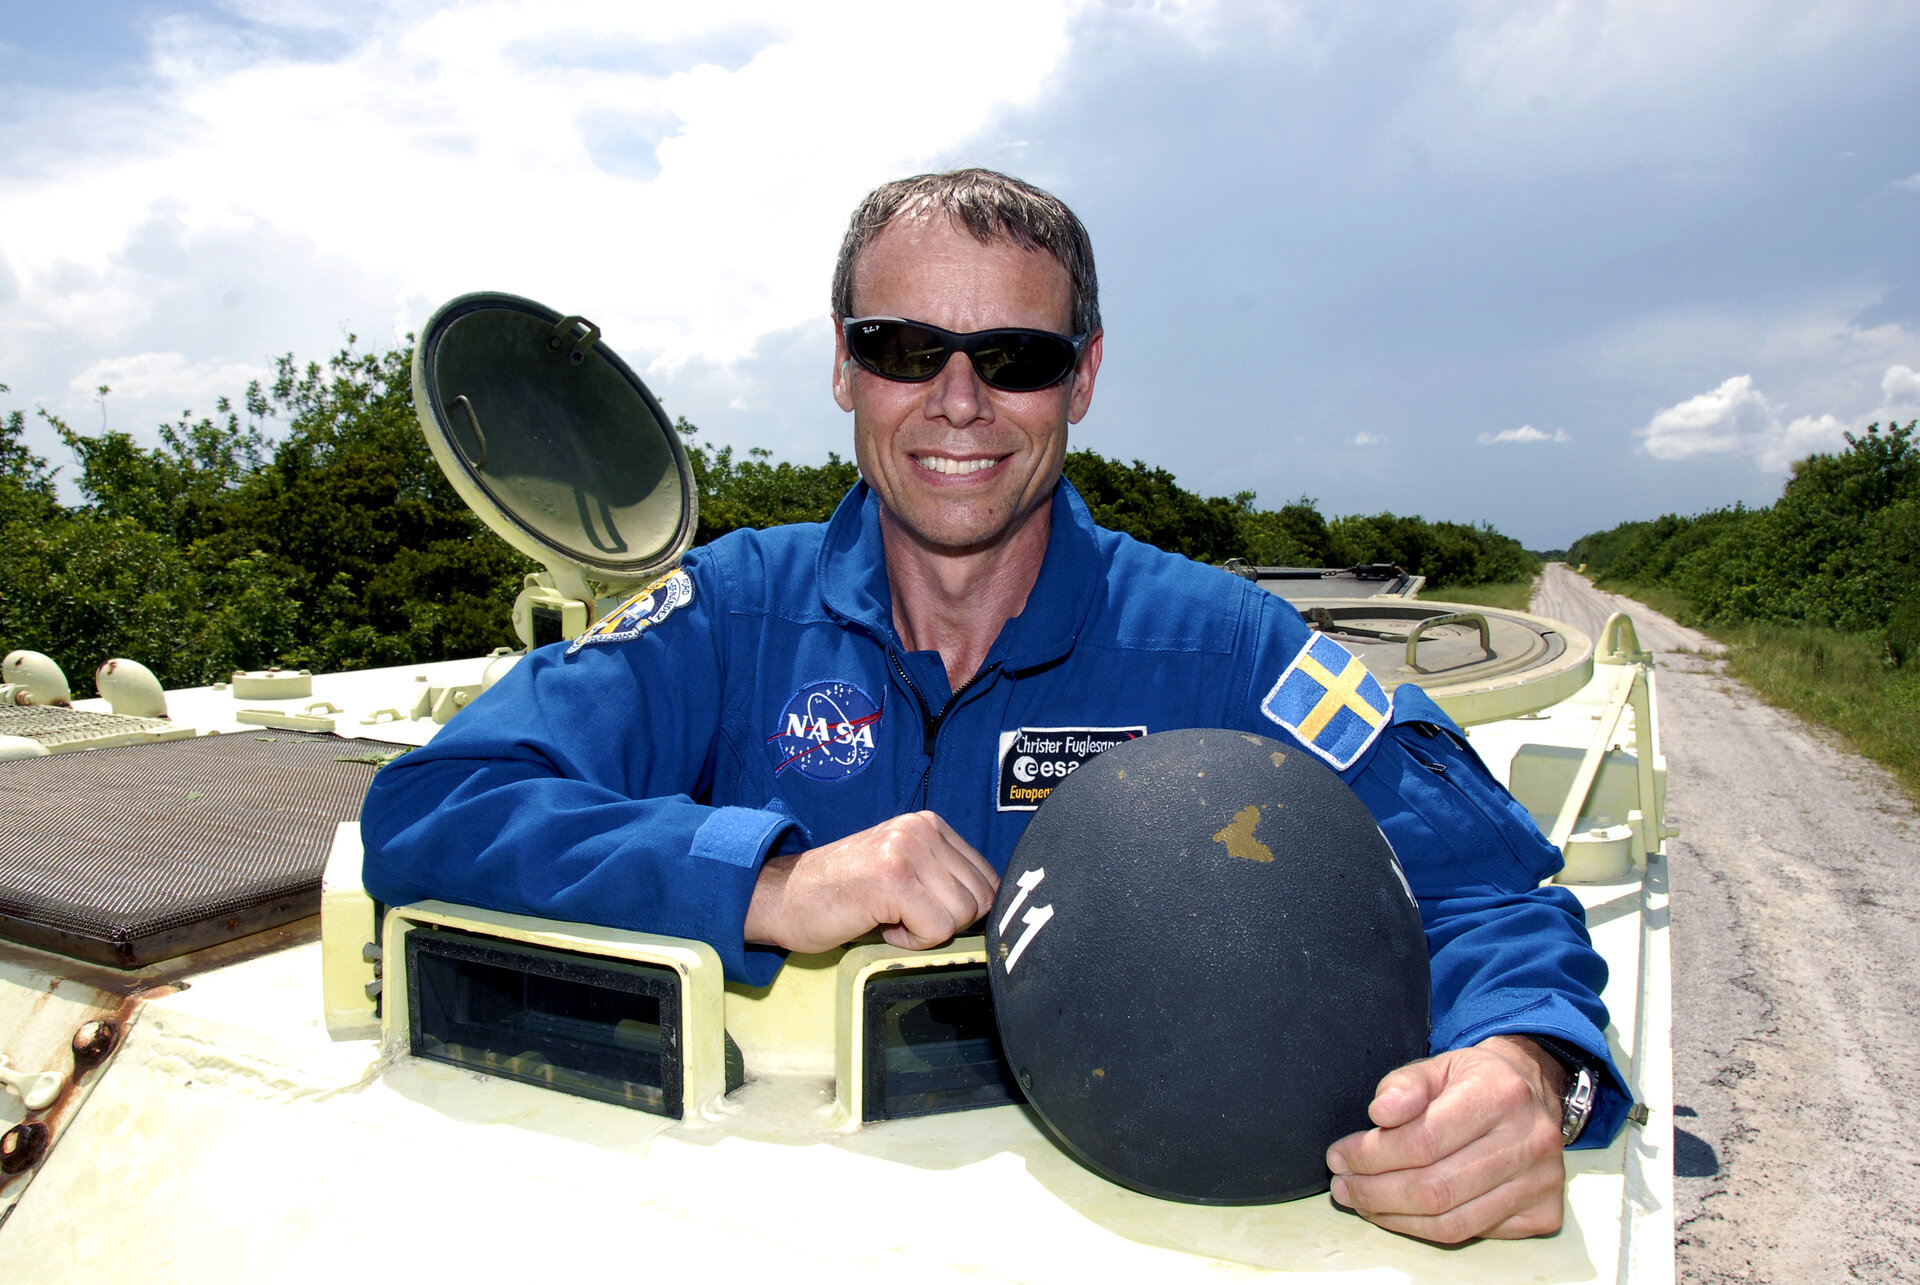 Alissé is Christer Fuglesang's second spaceflight